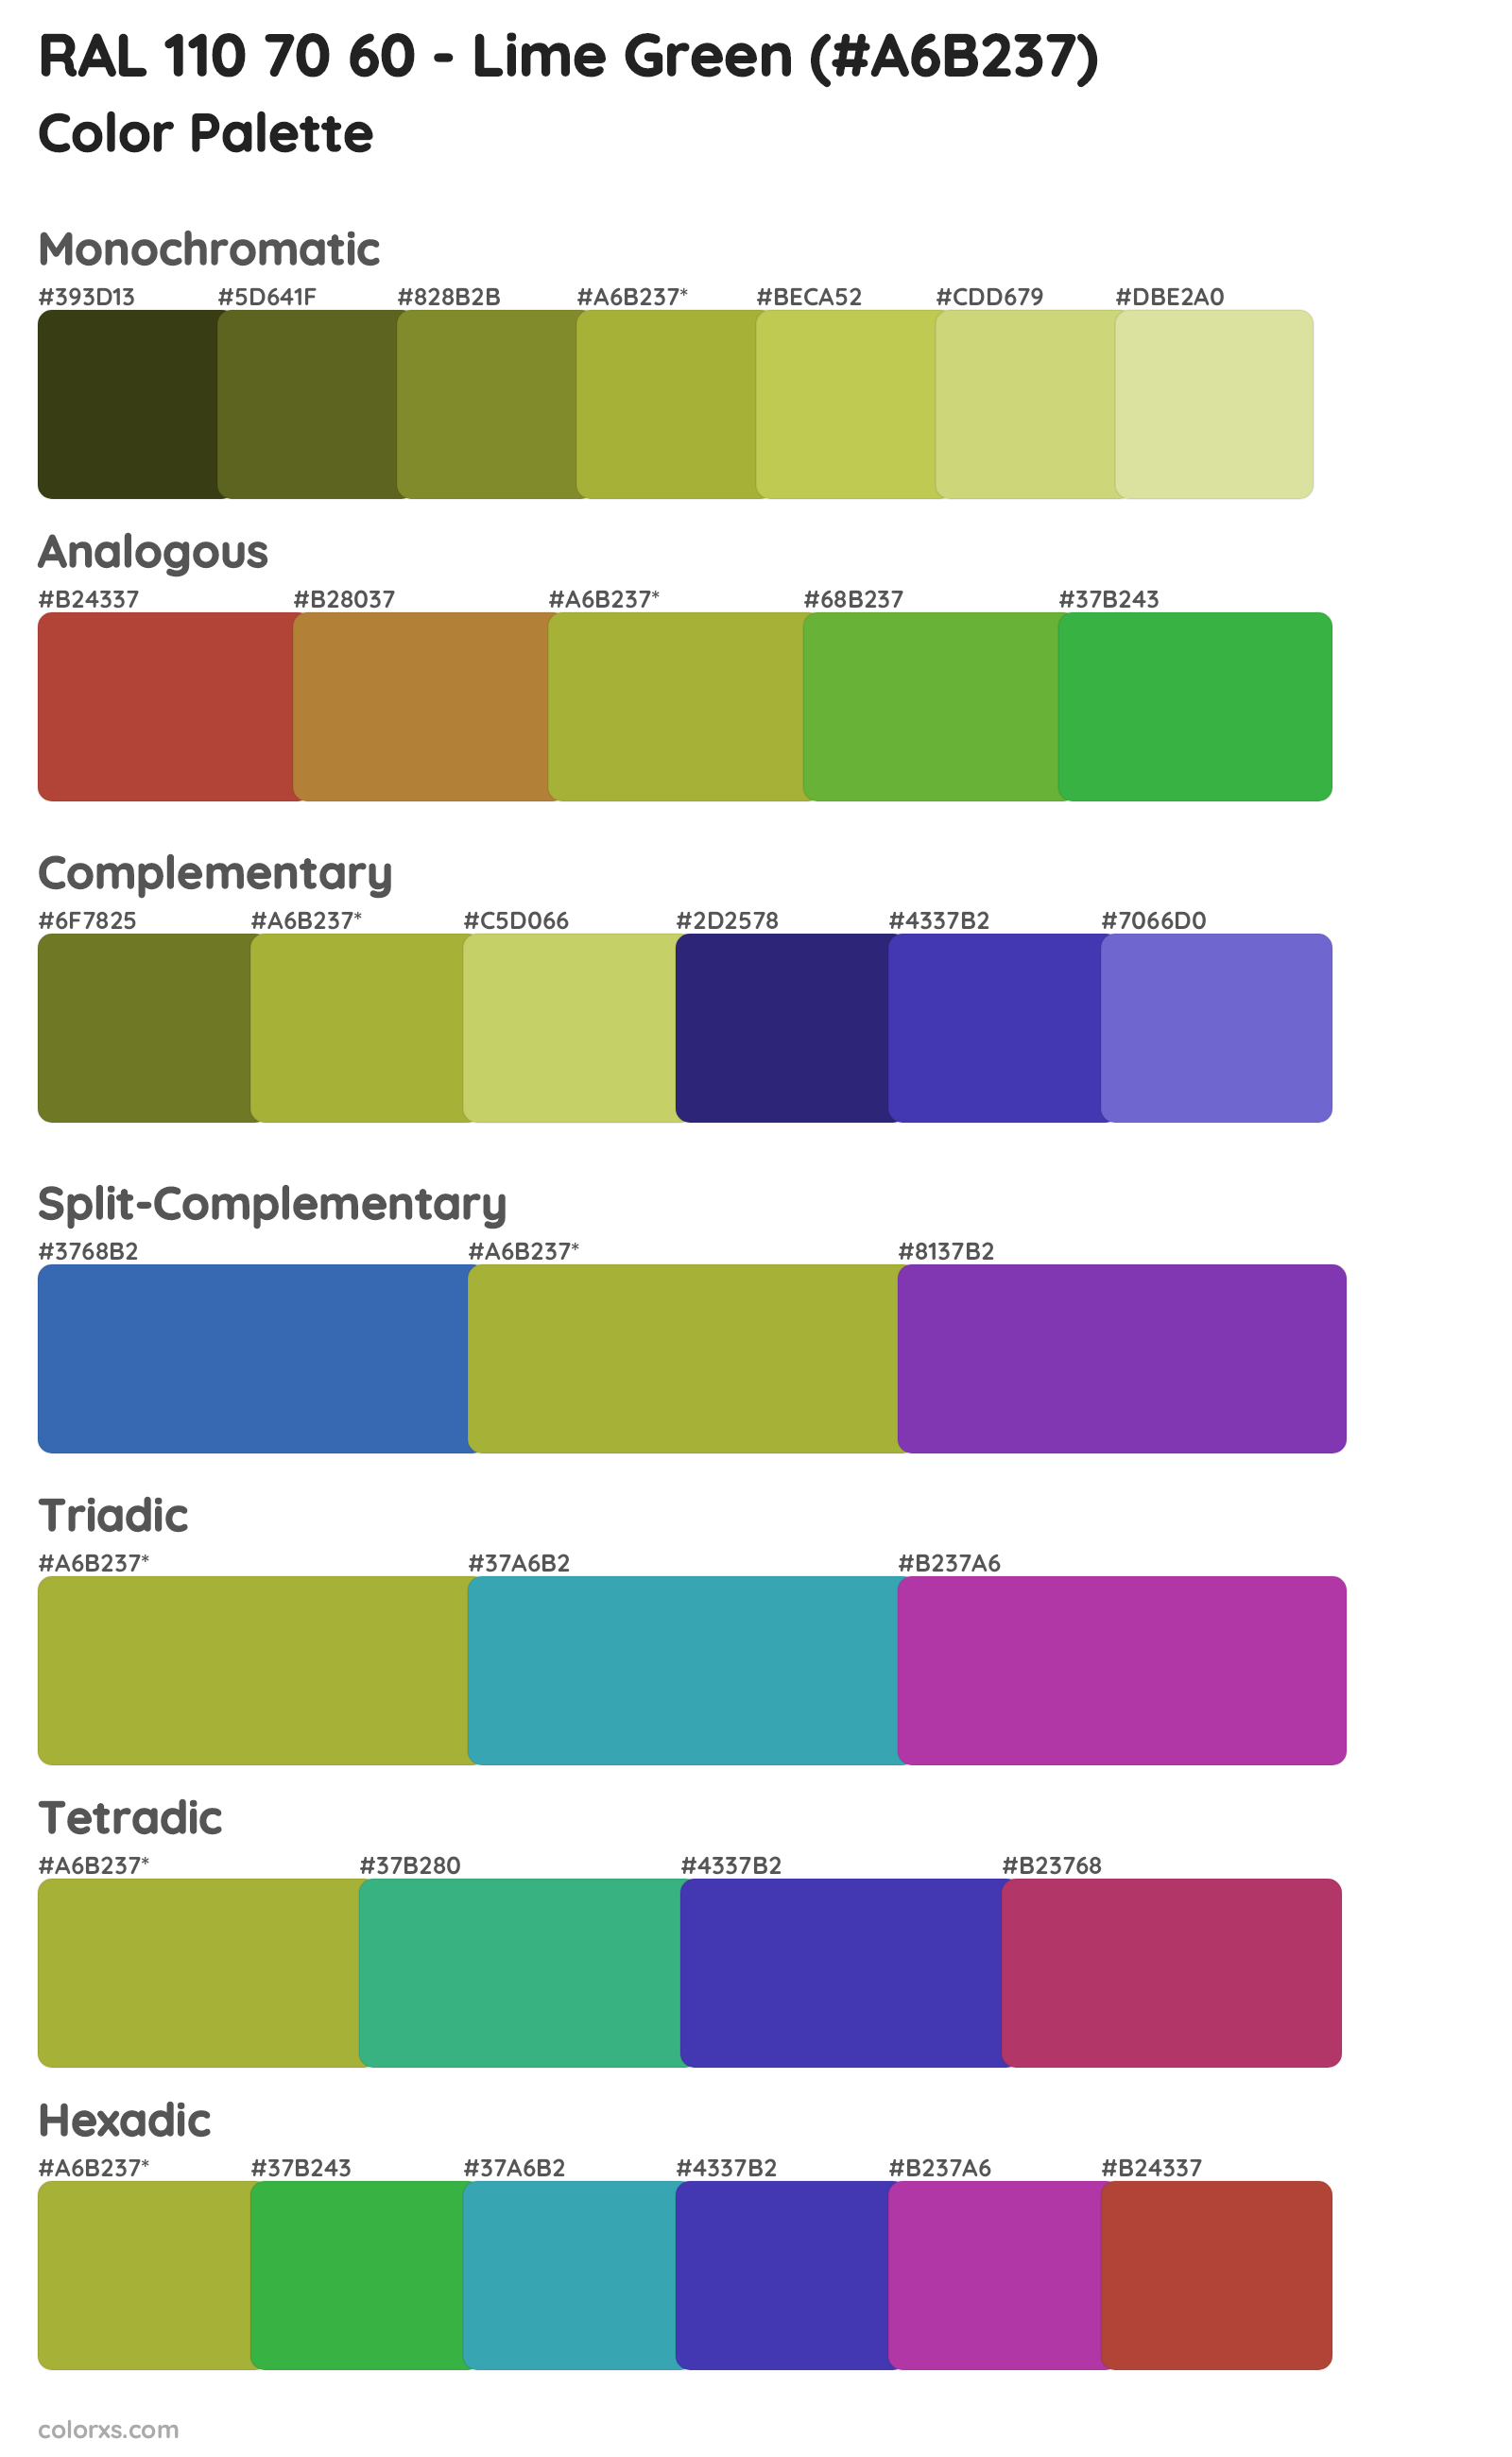 RAL 110 70 60 - Lime Green Color Scheme Palettes